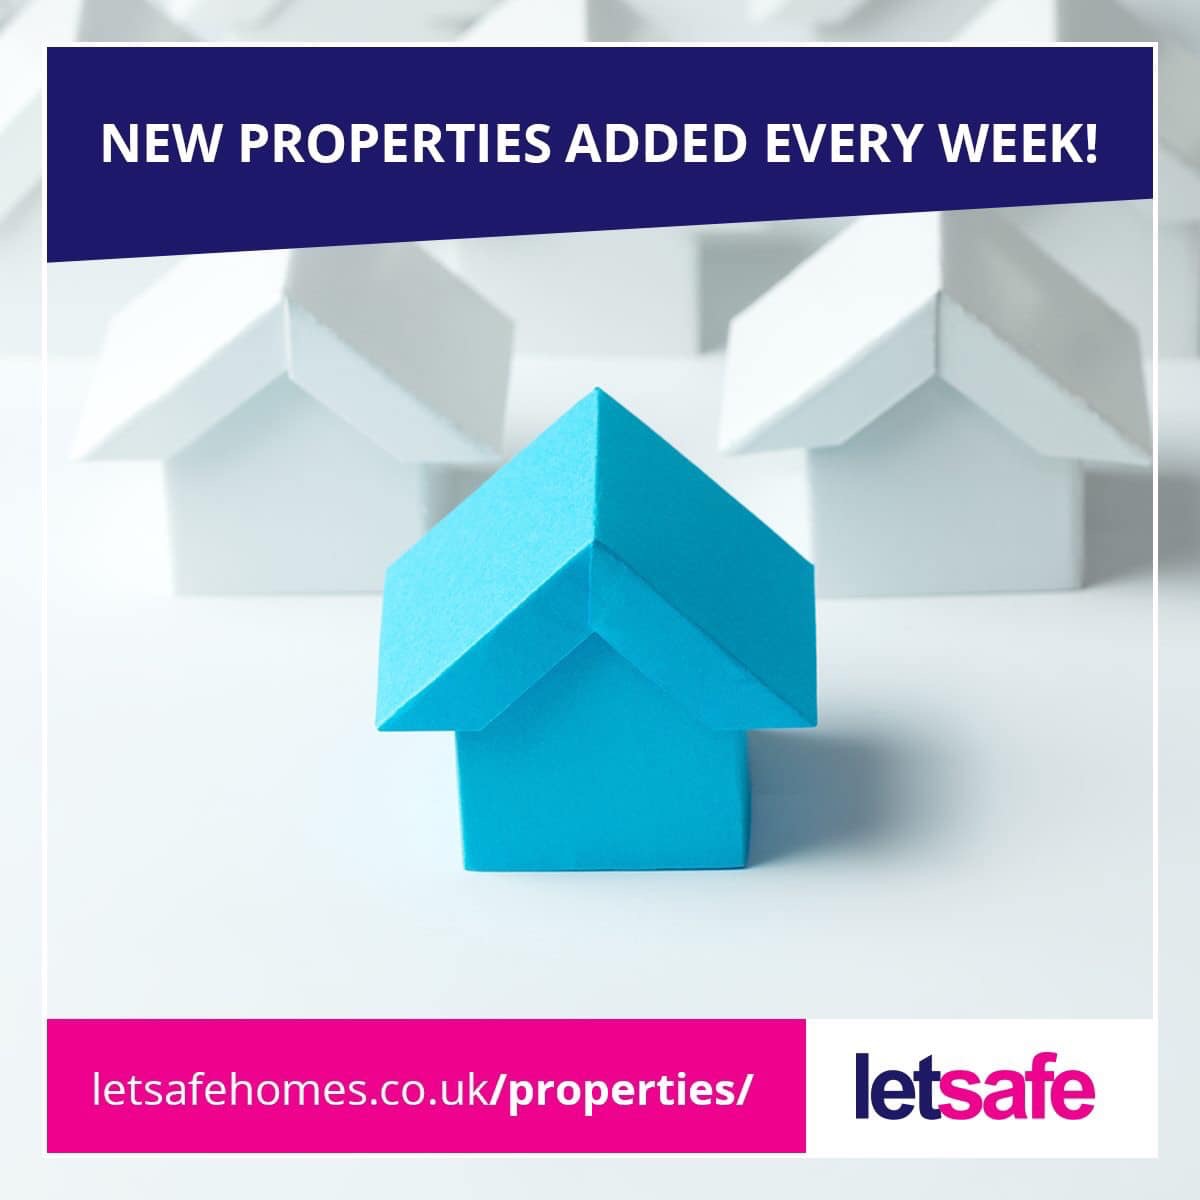 New properties added every week